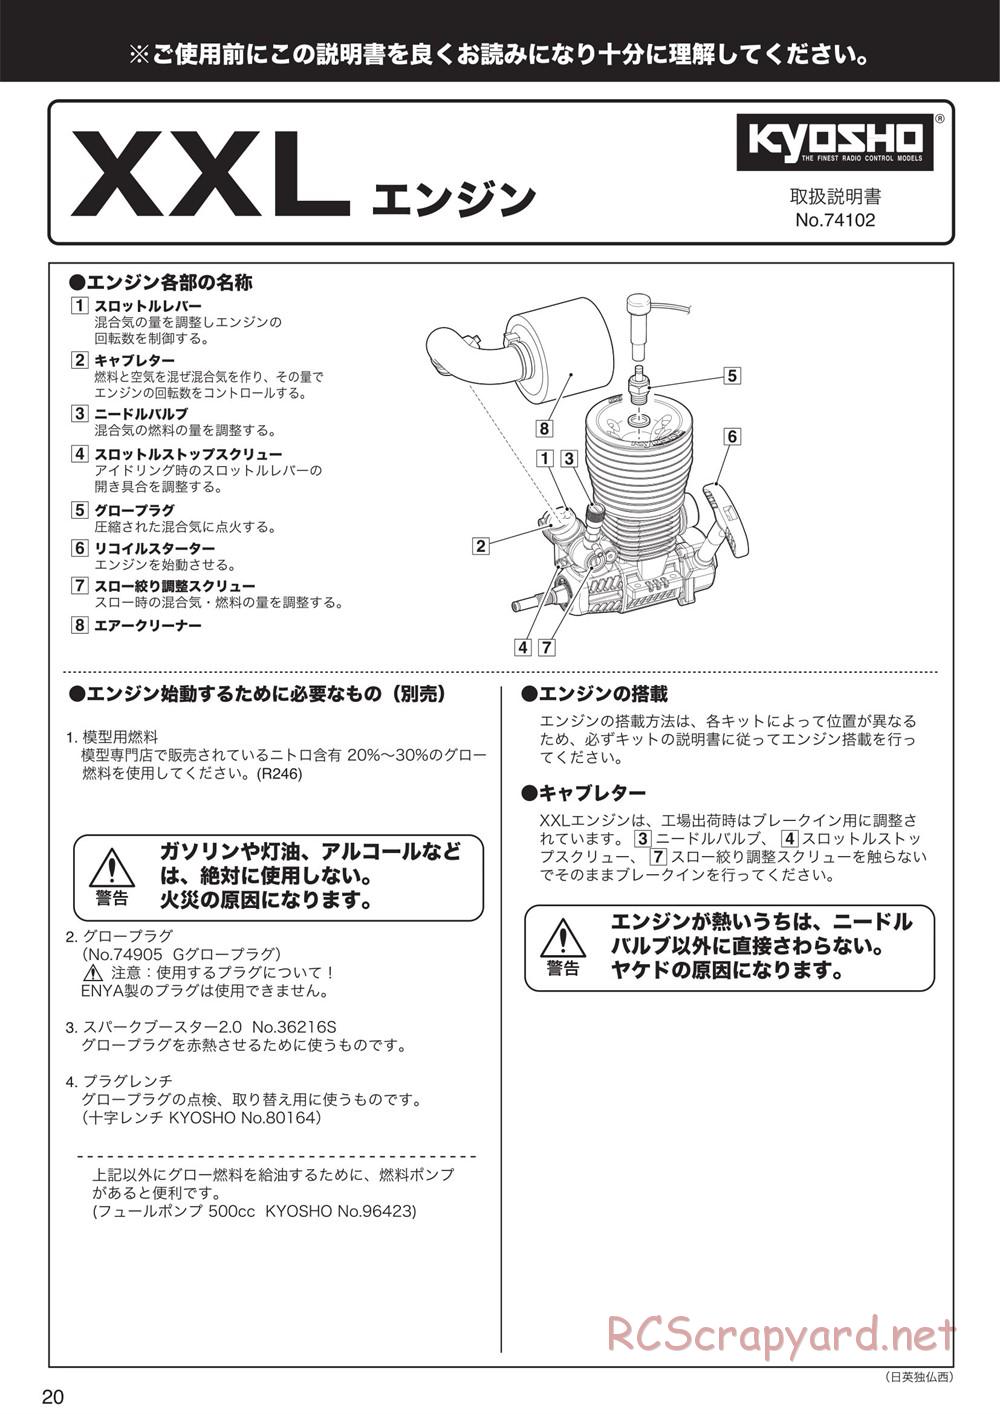 Kyosho - Scorpion XXL Nitro - Manual - Page 20